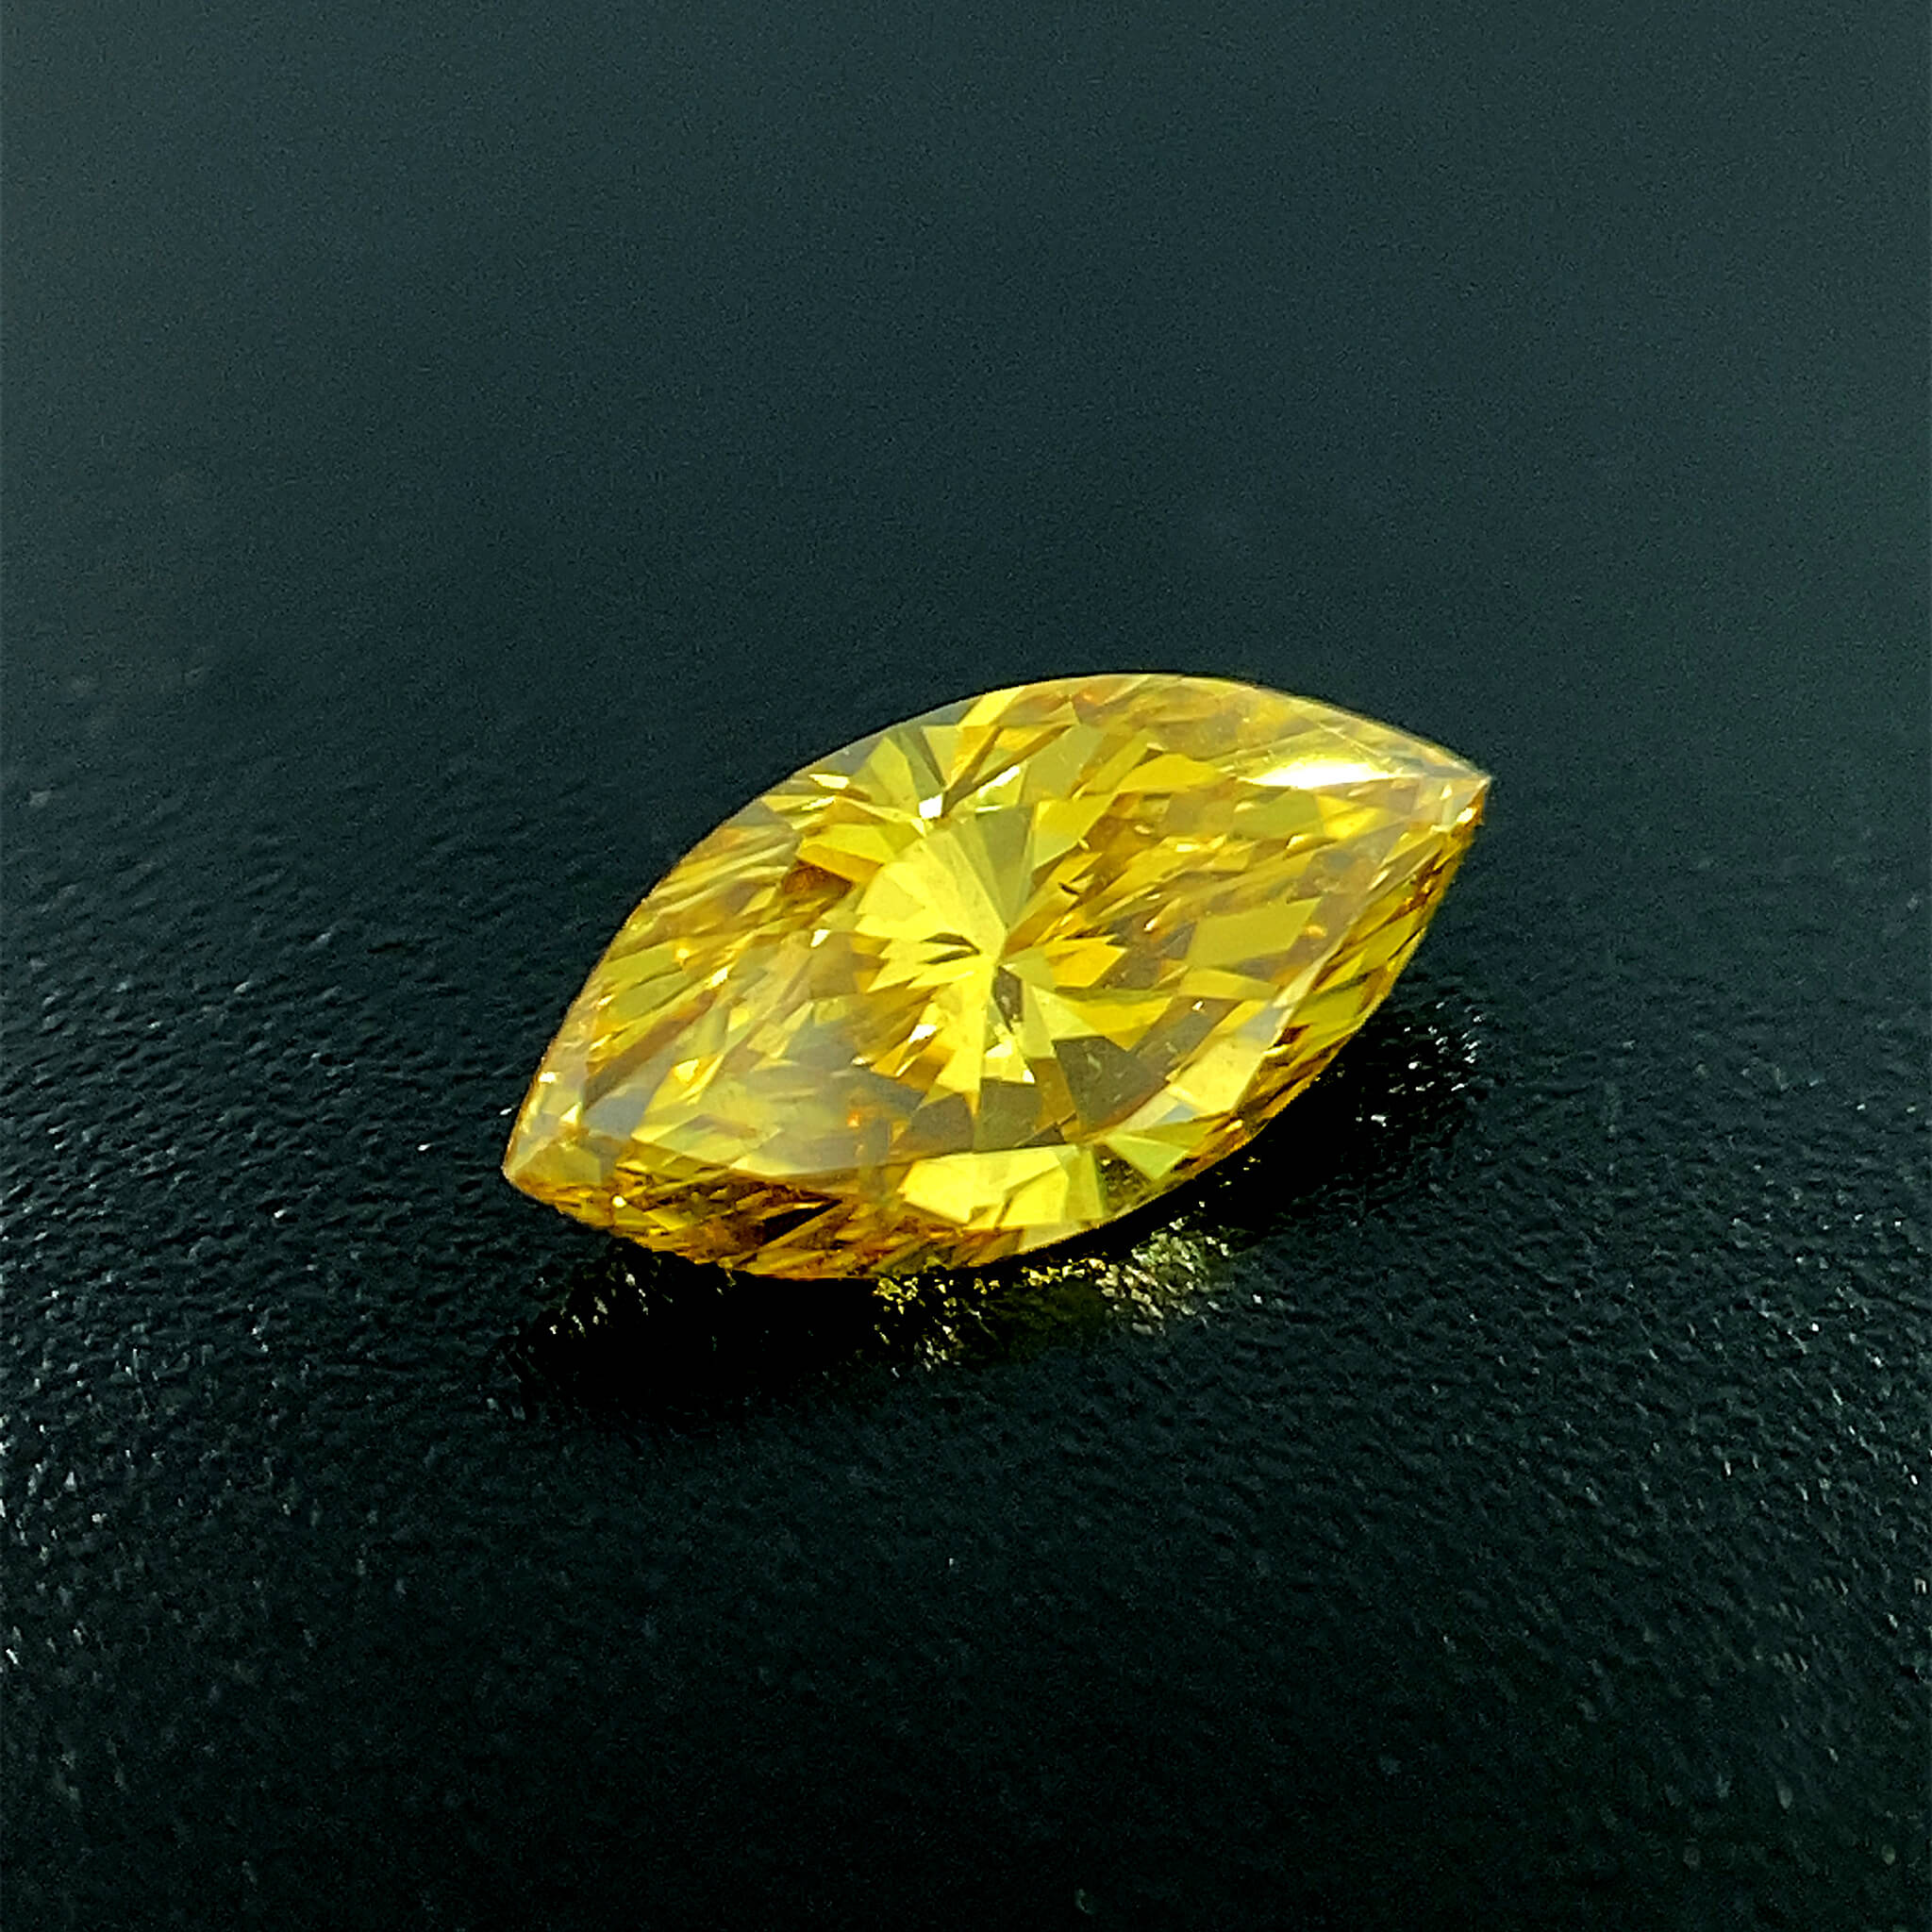 Żółty diament Fancy Intense Greenish Yellow 0,60 Ct / VS1